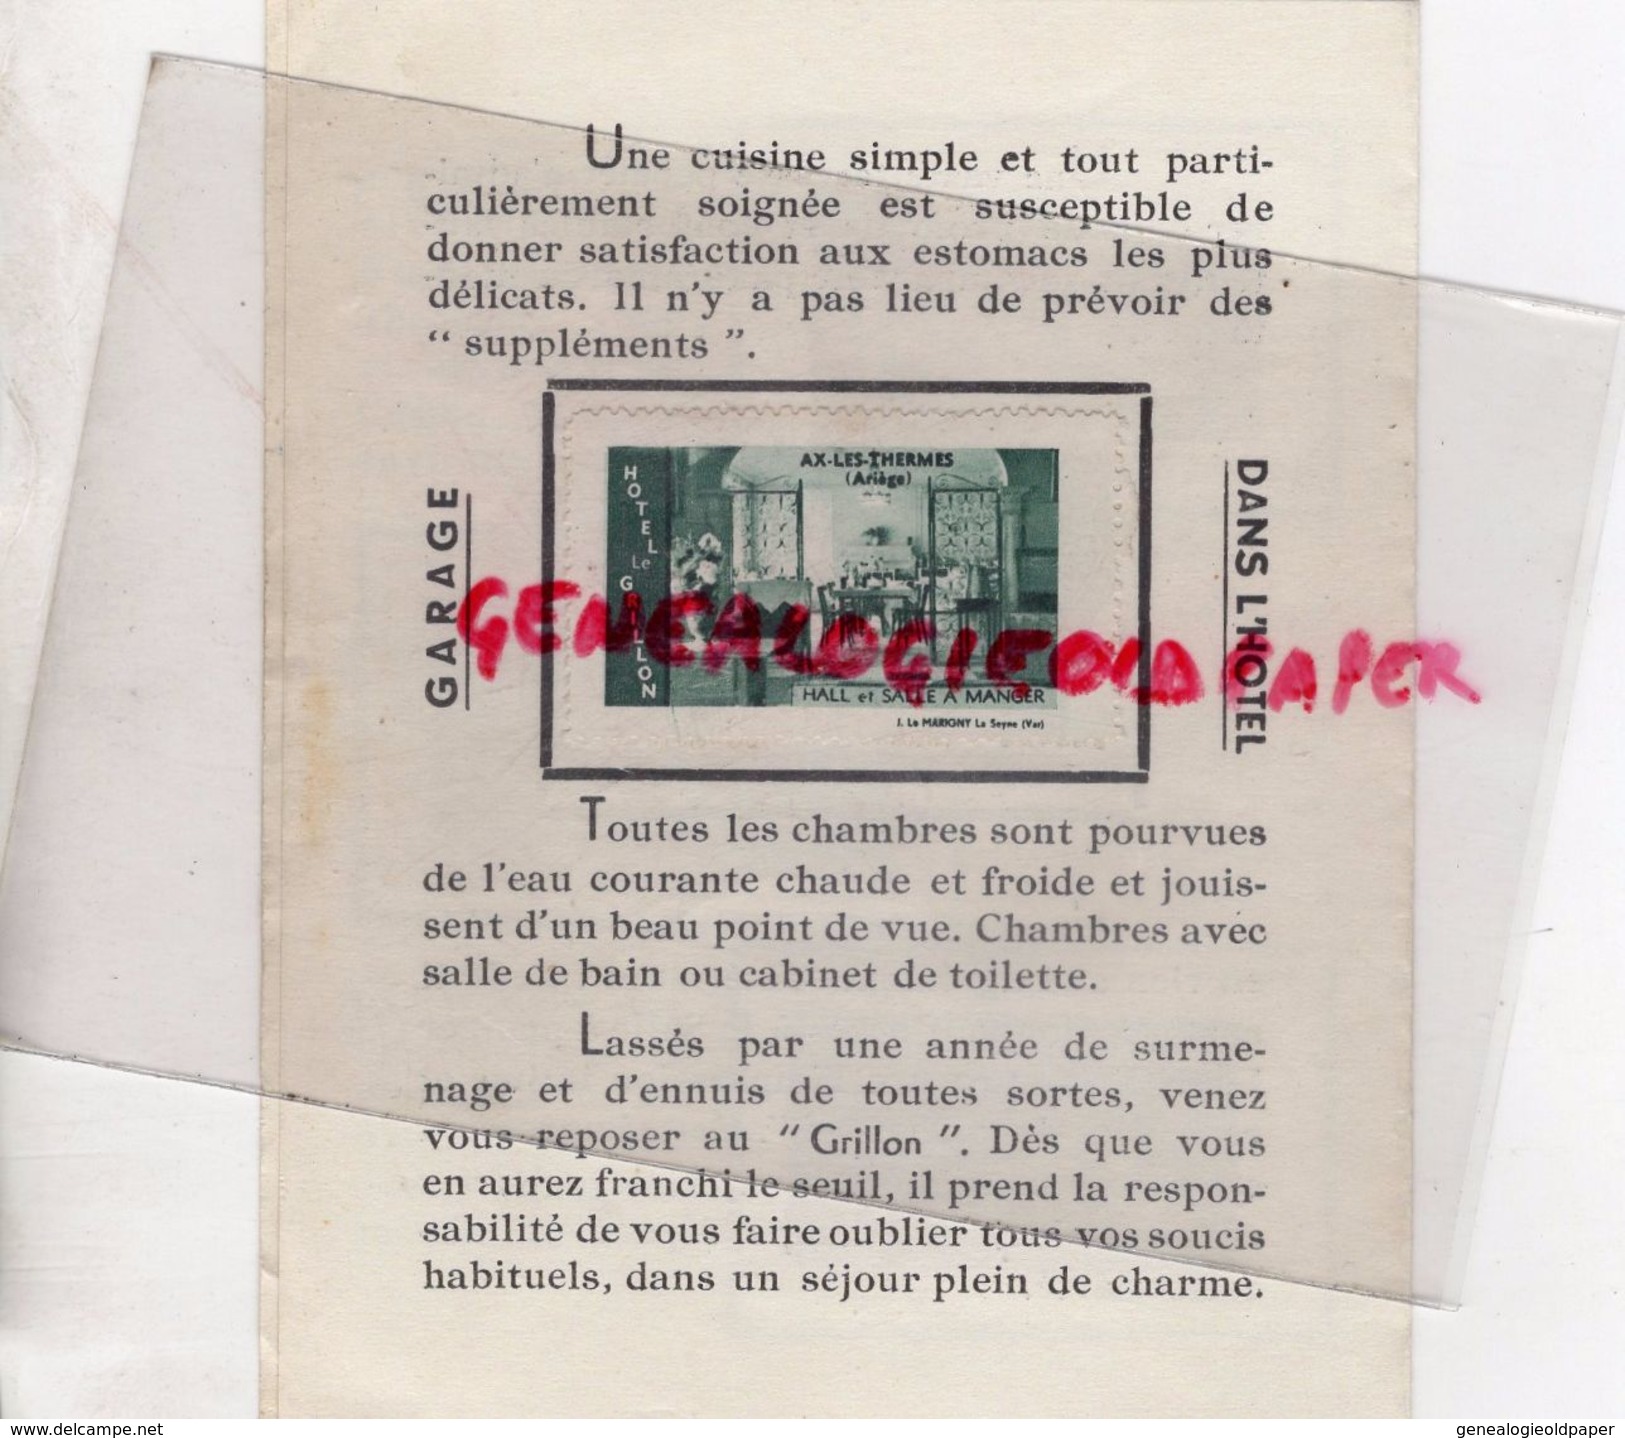 09- AX LES THERMES- HOTEL LE GRILLON- 1960 PUBLICITE AVEC TIMBRES -COIN JARDIN-TERRASSE-HALL SALLE A MANGER - 1950 - ...